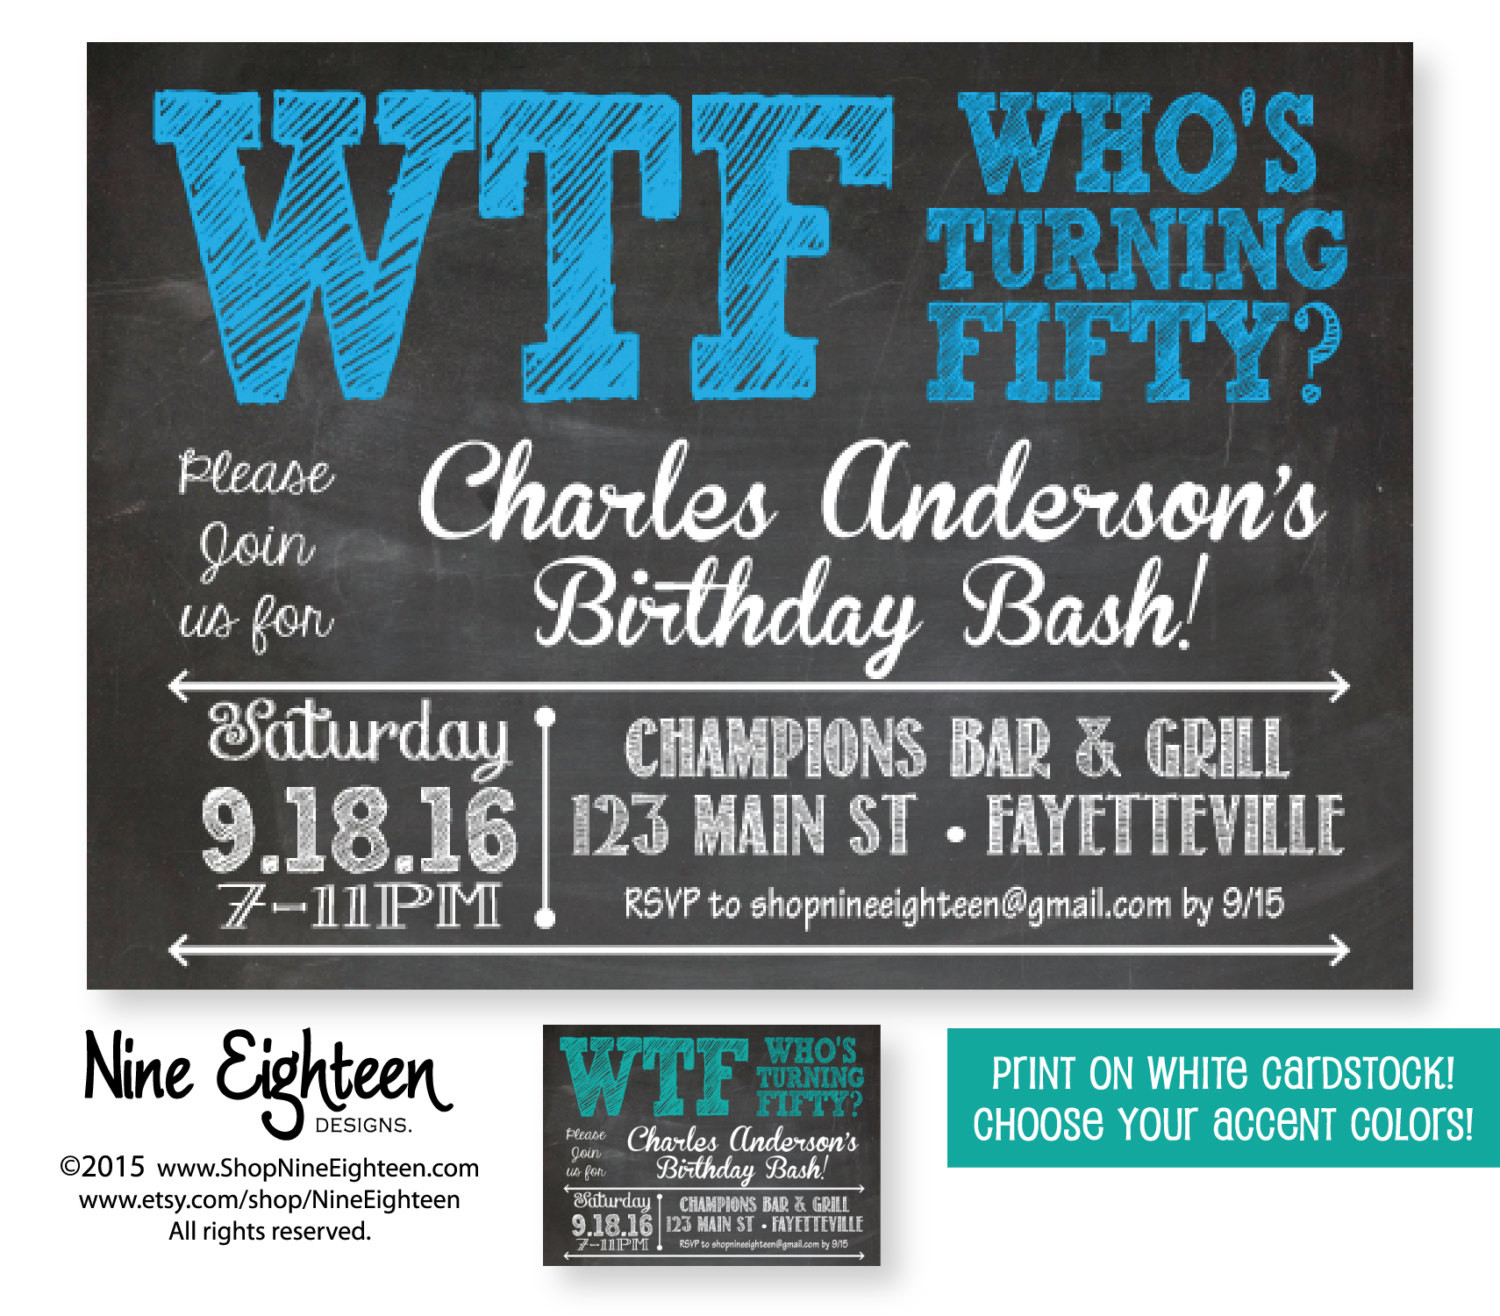 50th Birthday Party Invitations Ideas
 50th Birthday Party Invitation WTF Who s Turning by